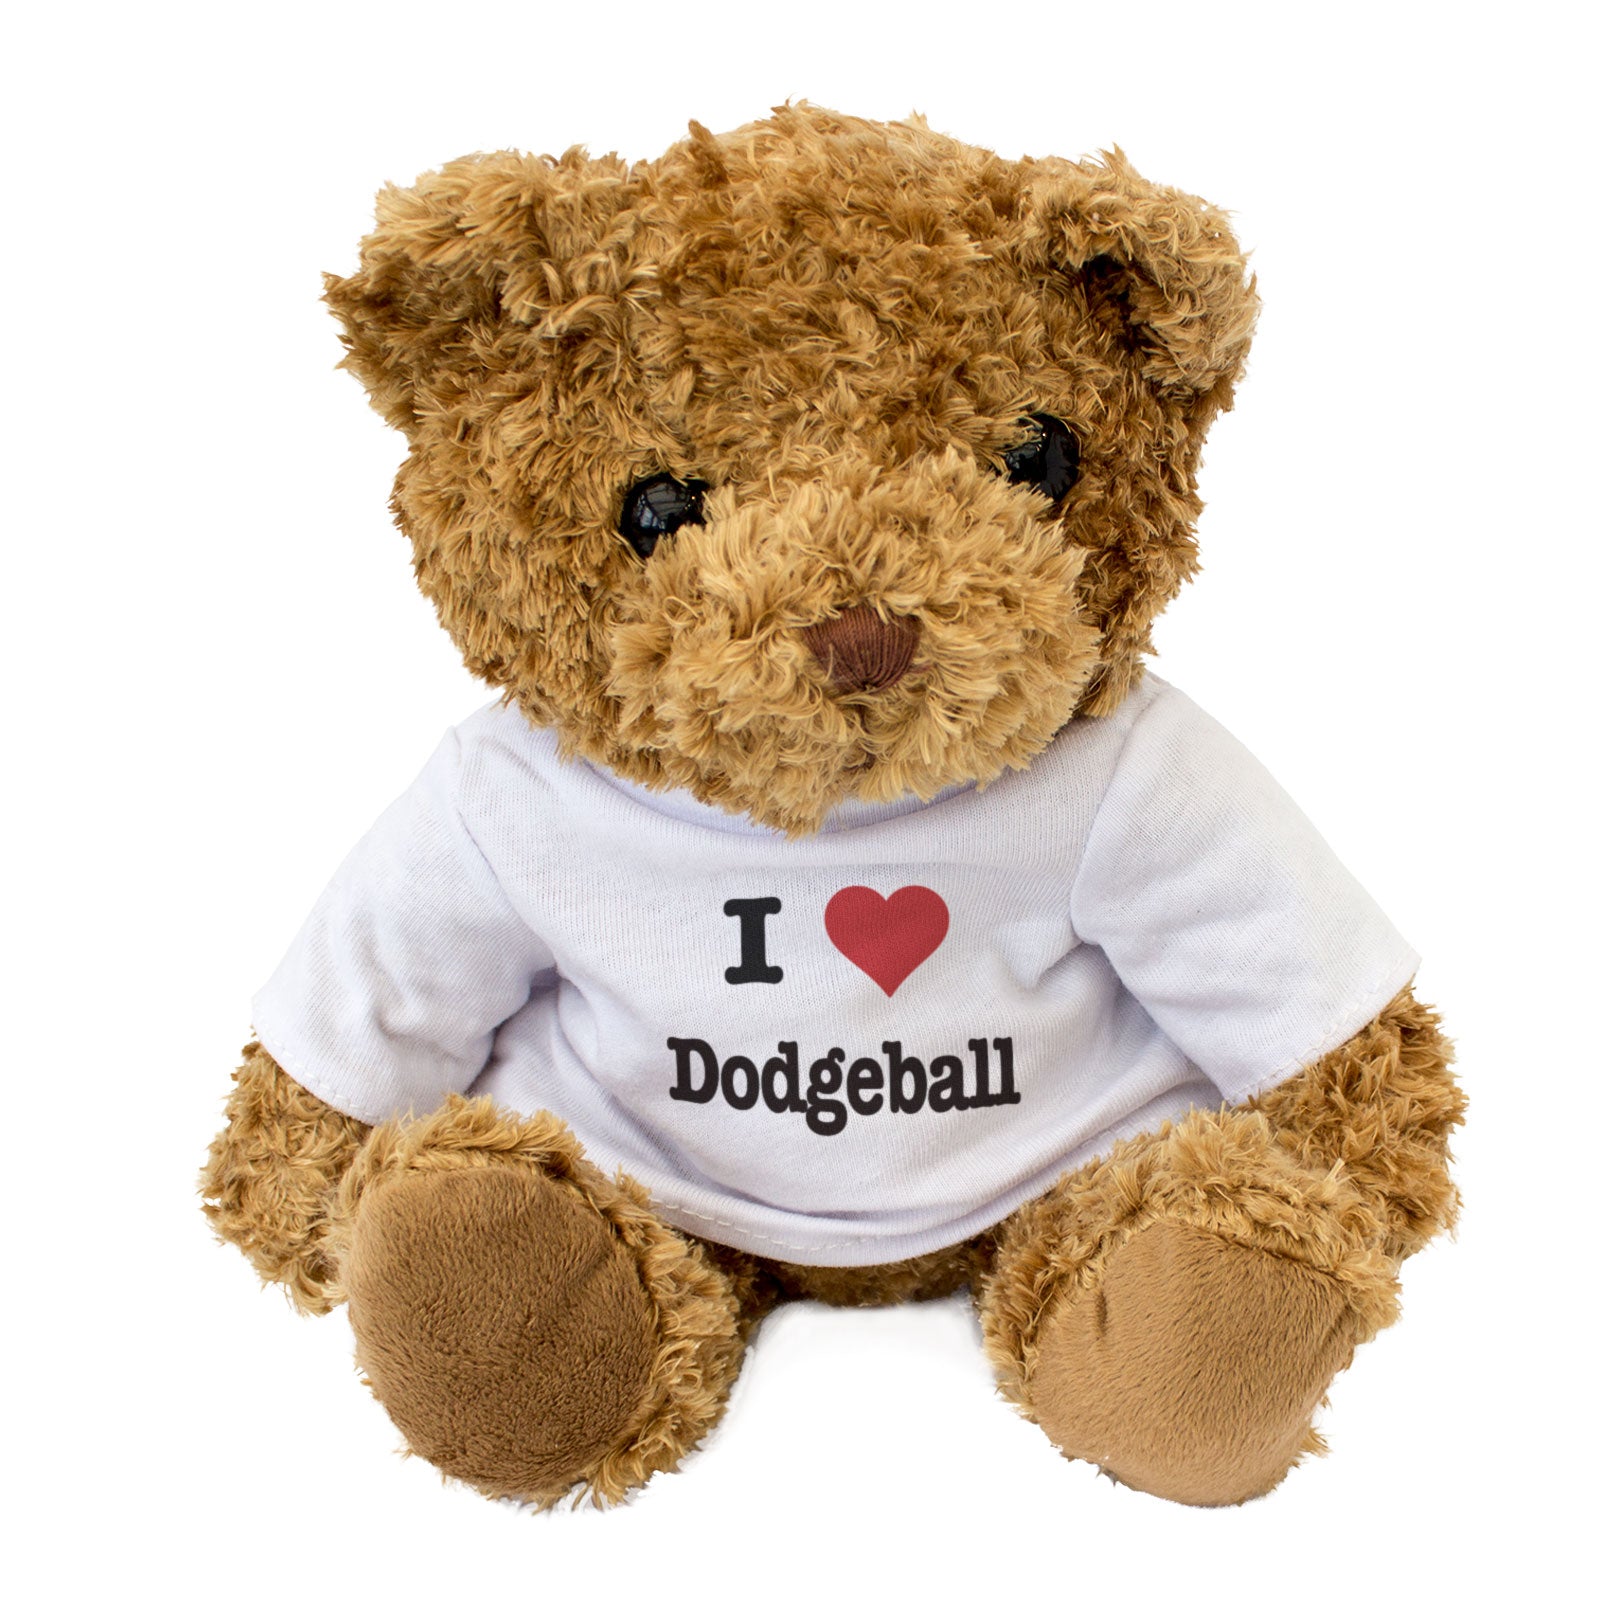 I Love Dodgeball - Teddy Bear